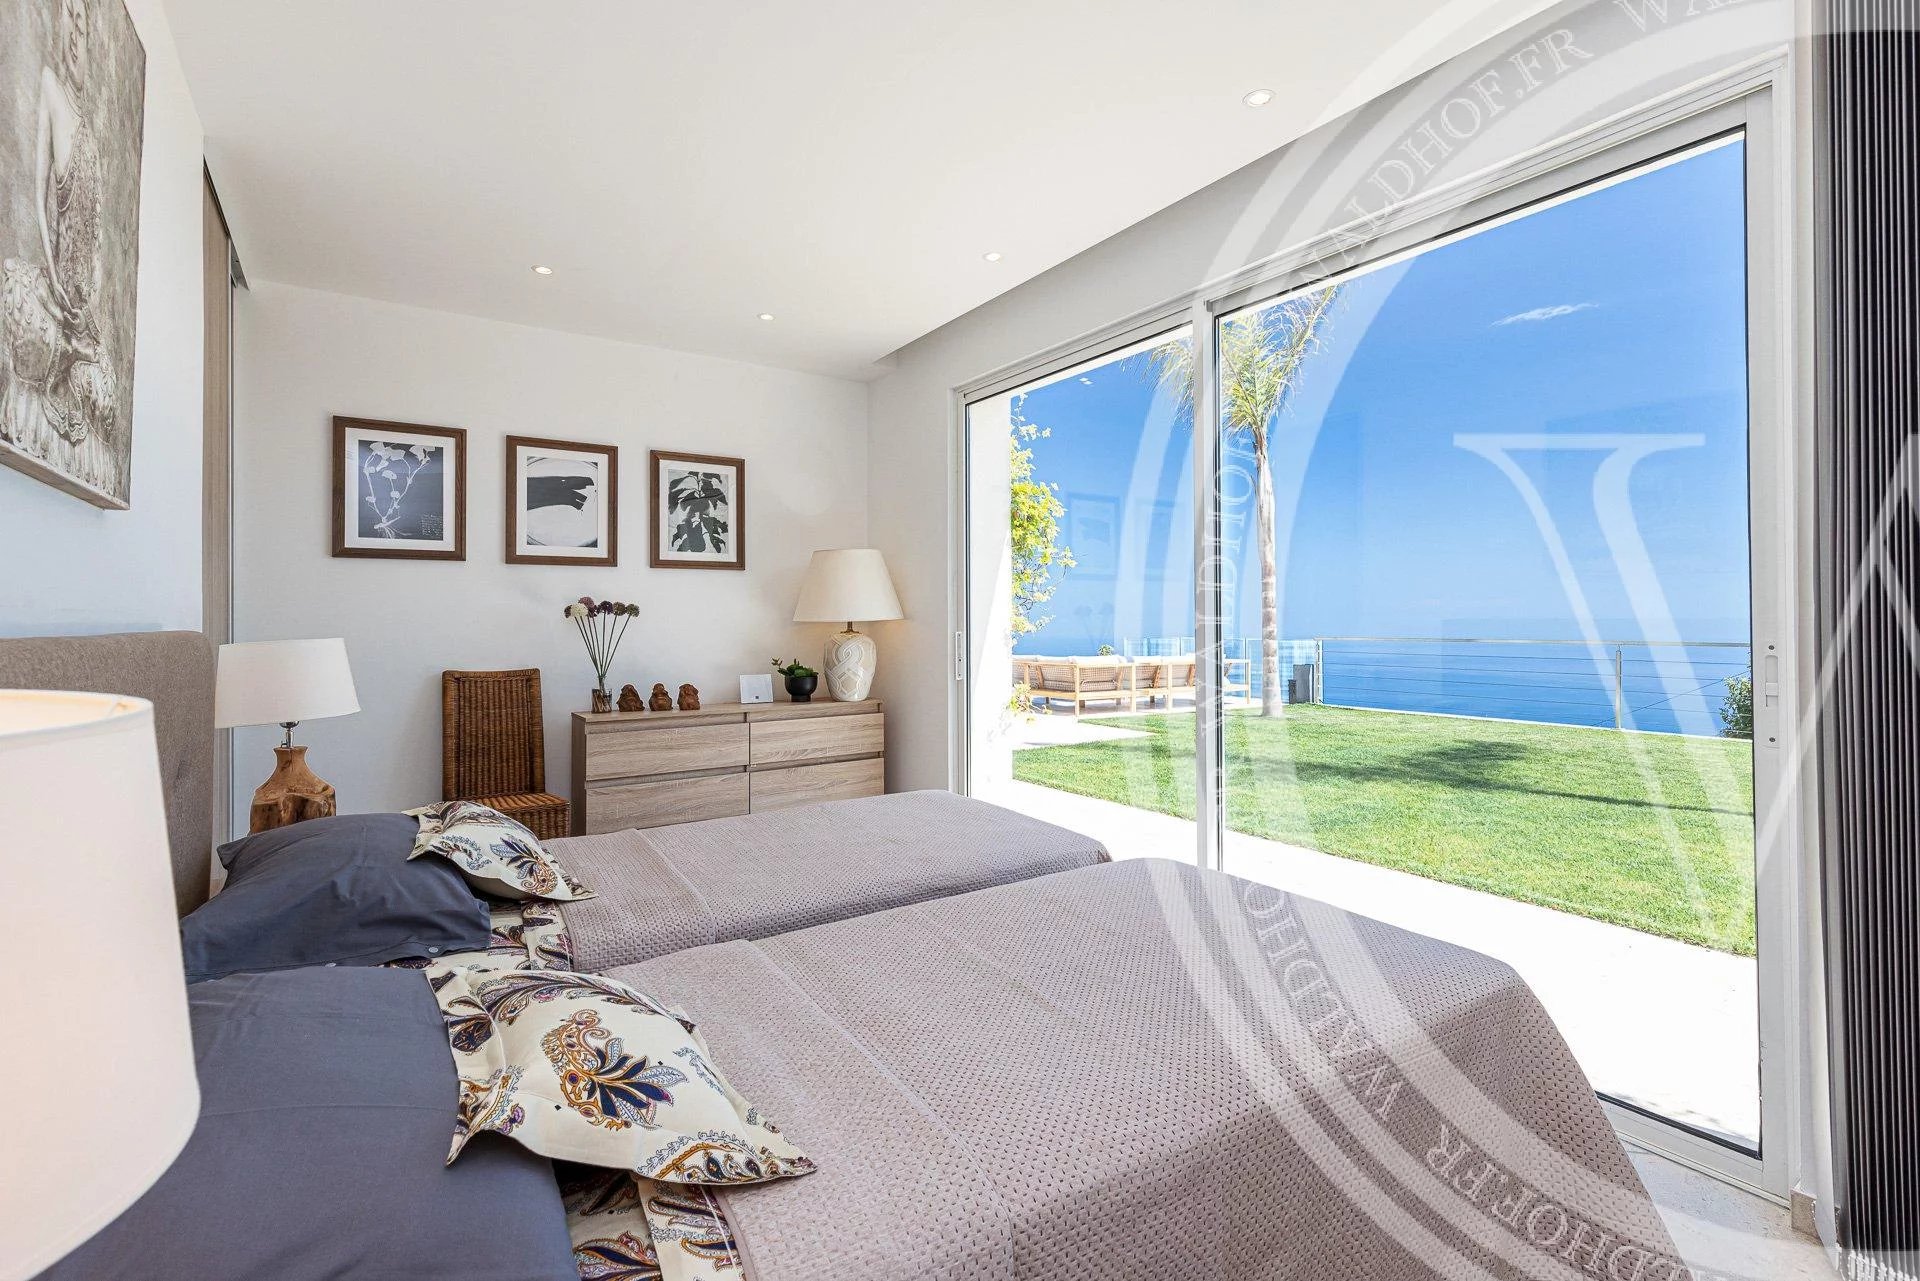 Villa Panorama, breathtaking 180° sea view overlooking Italy, Monaco and France